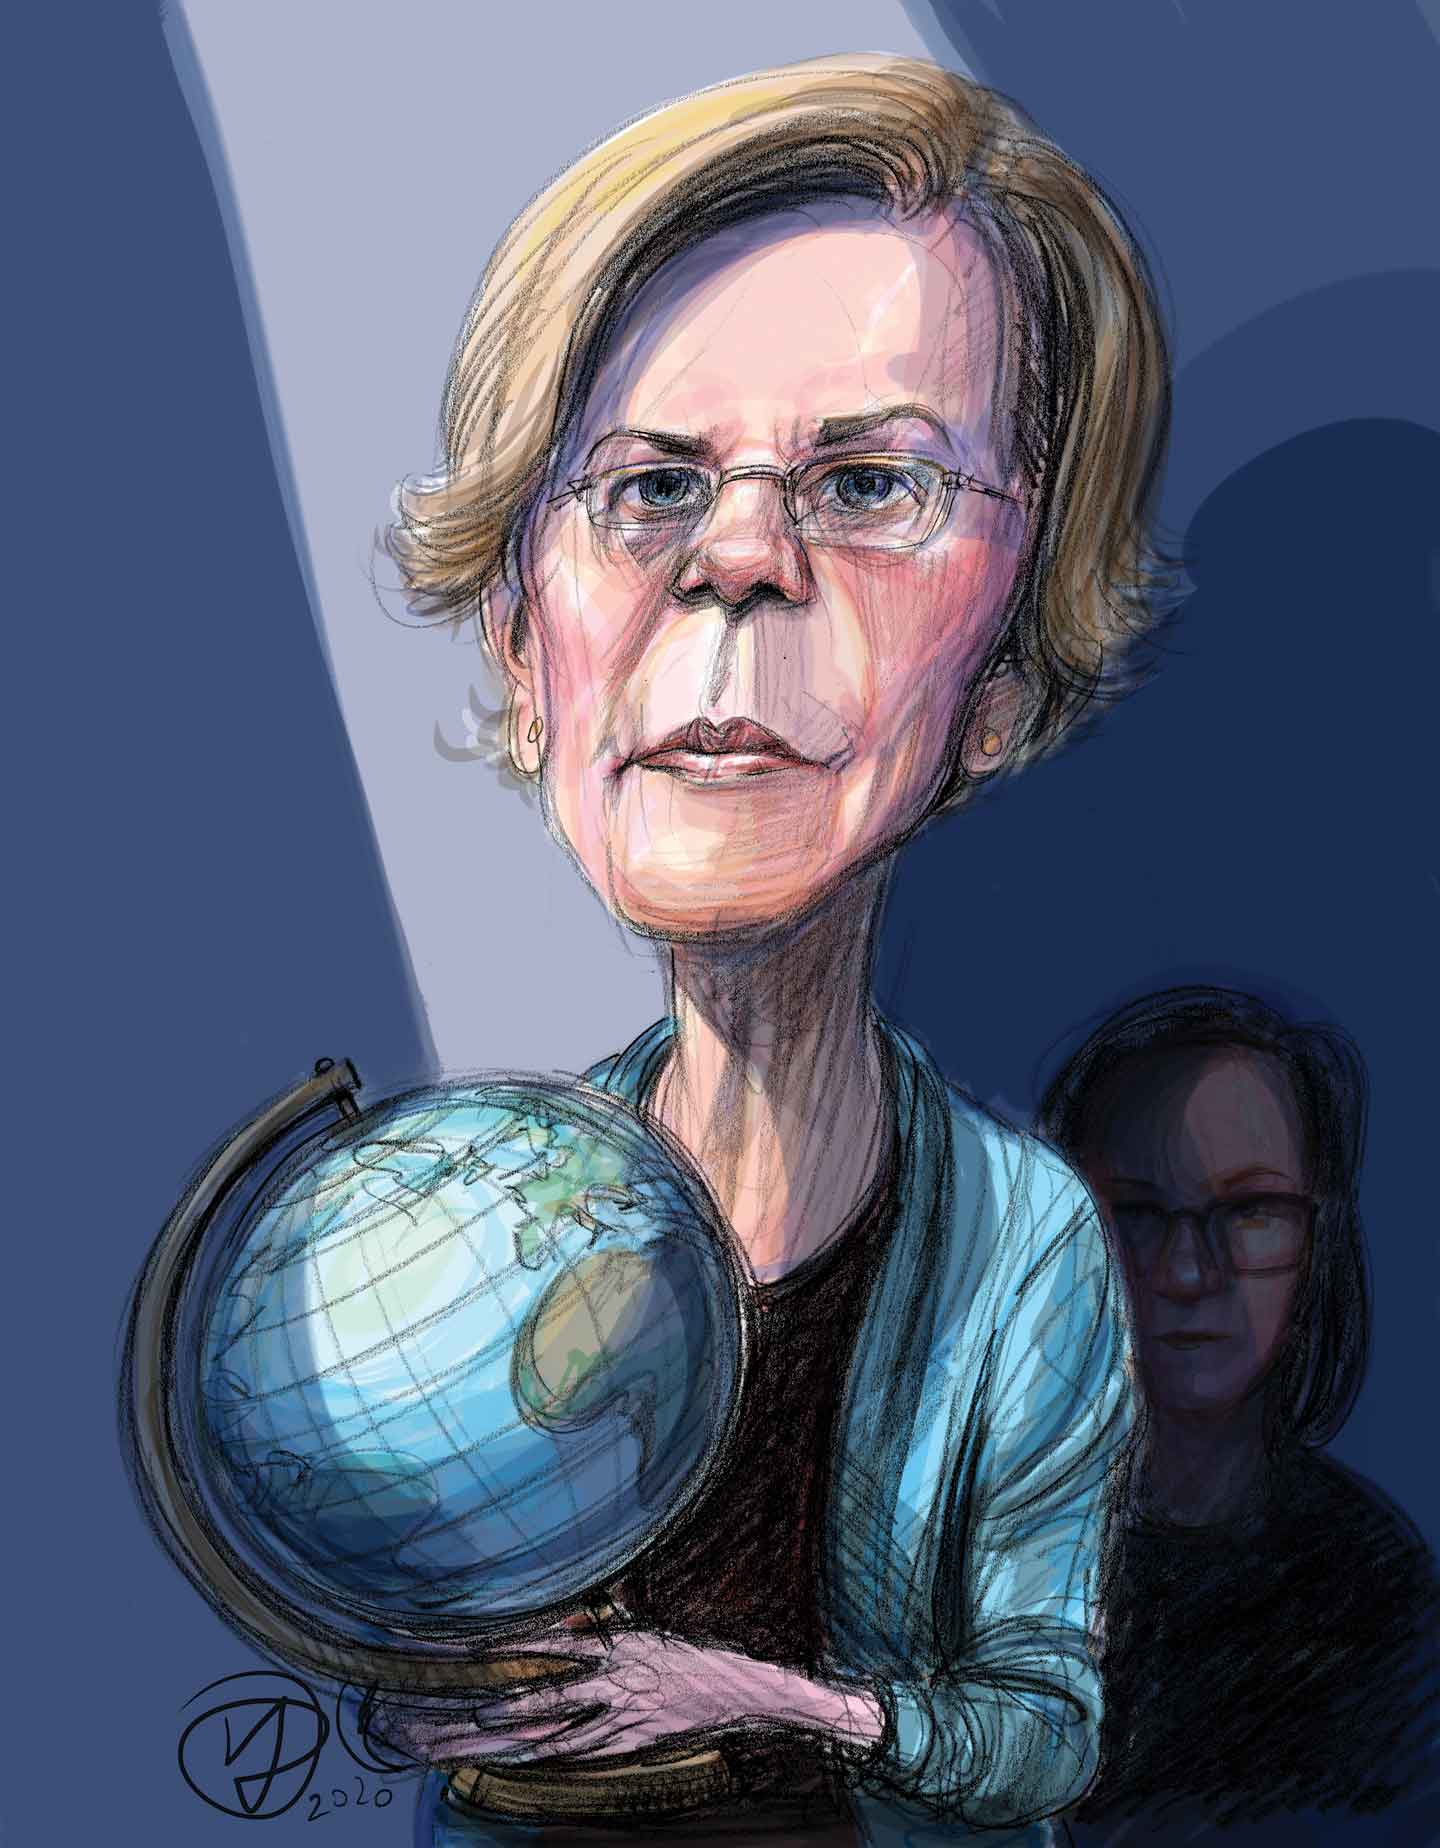 Elizabeth Warren's unorthodox career - The Boston Globe